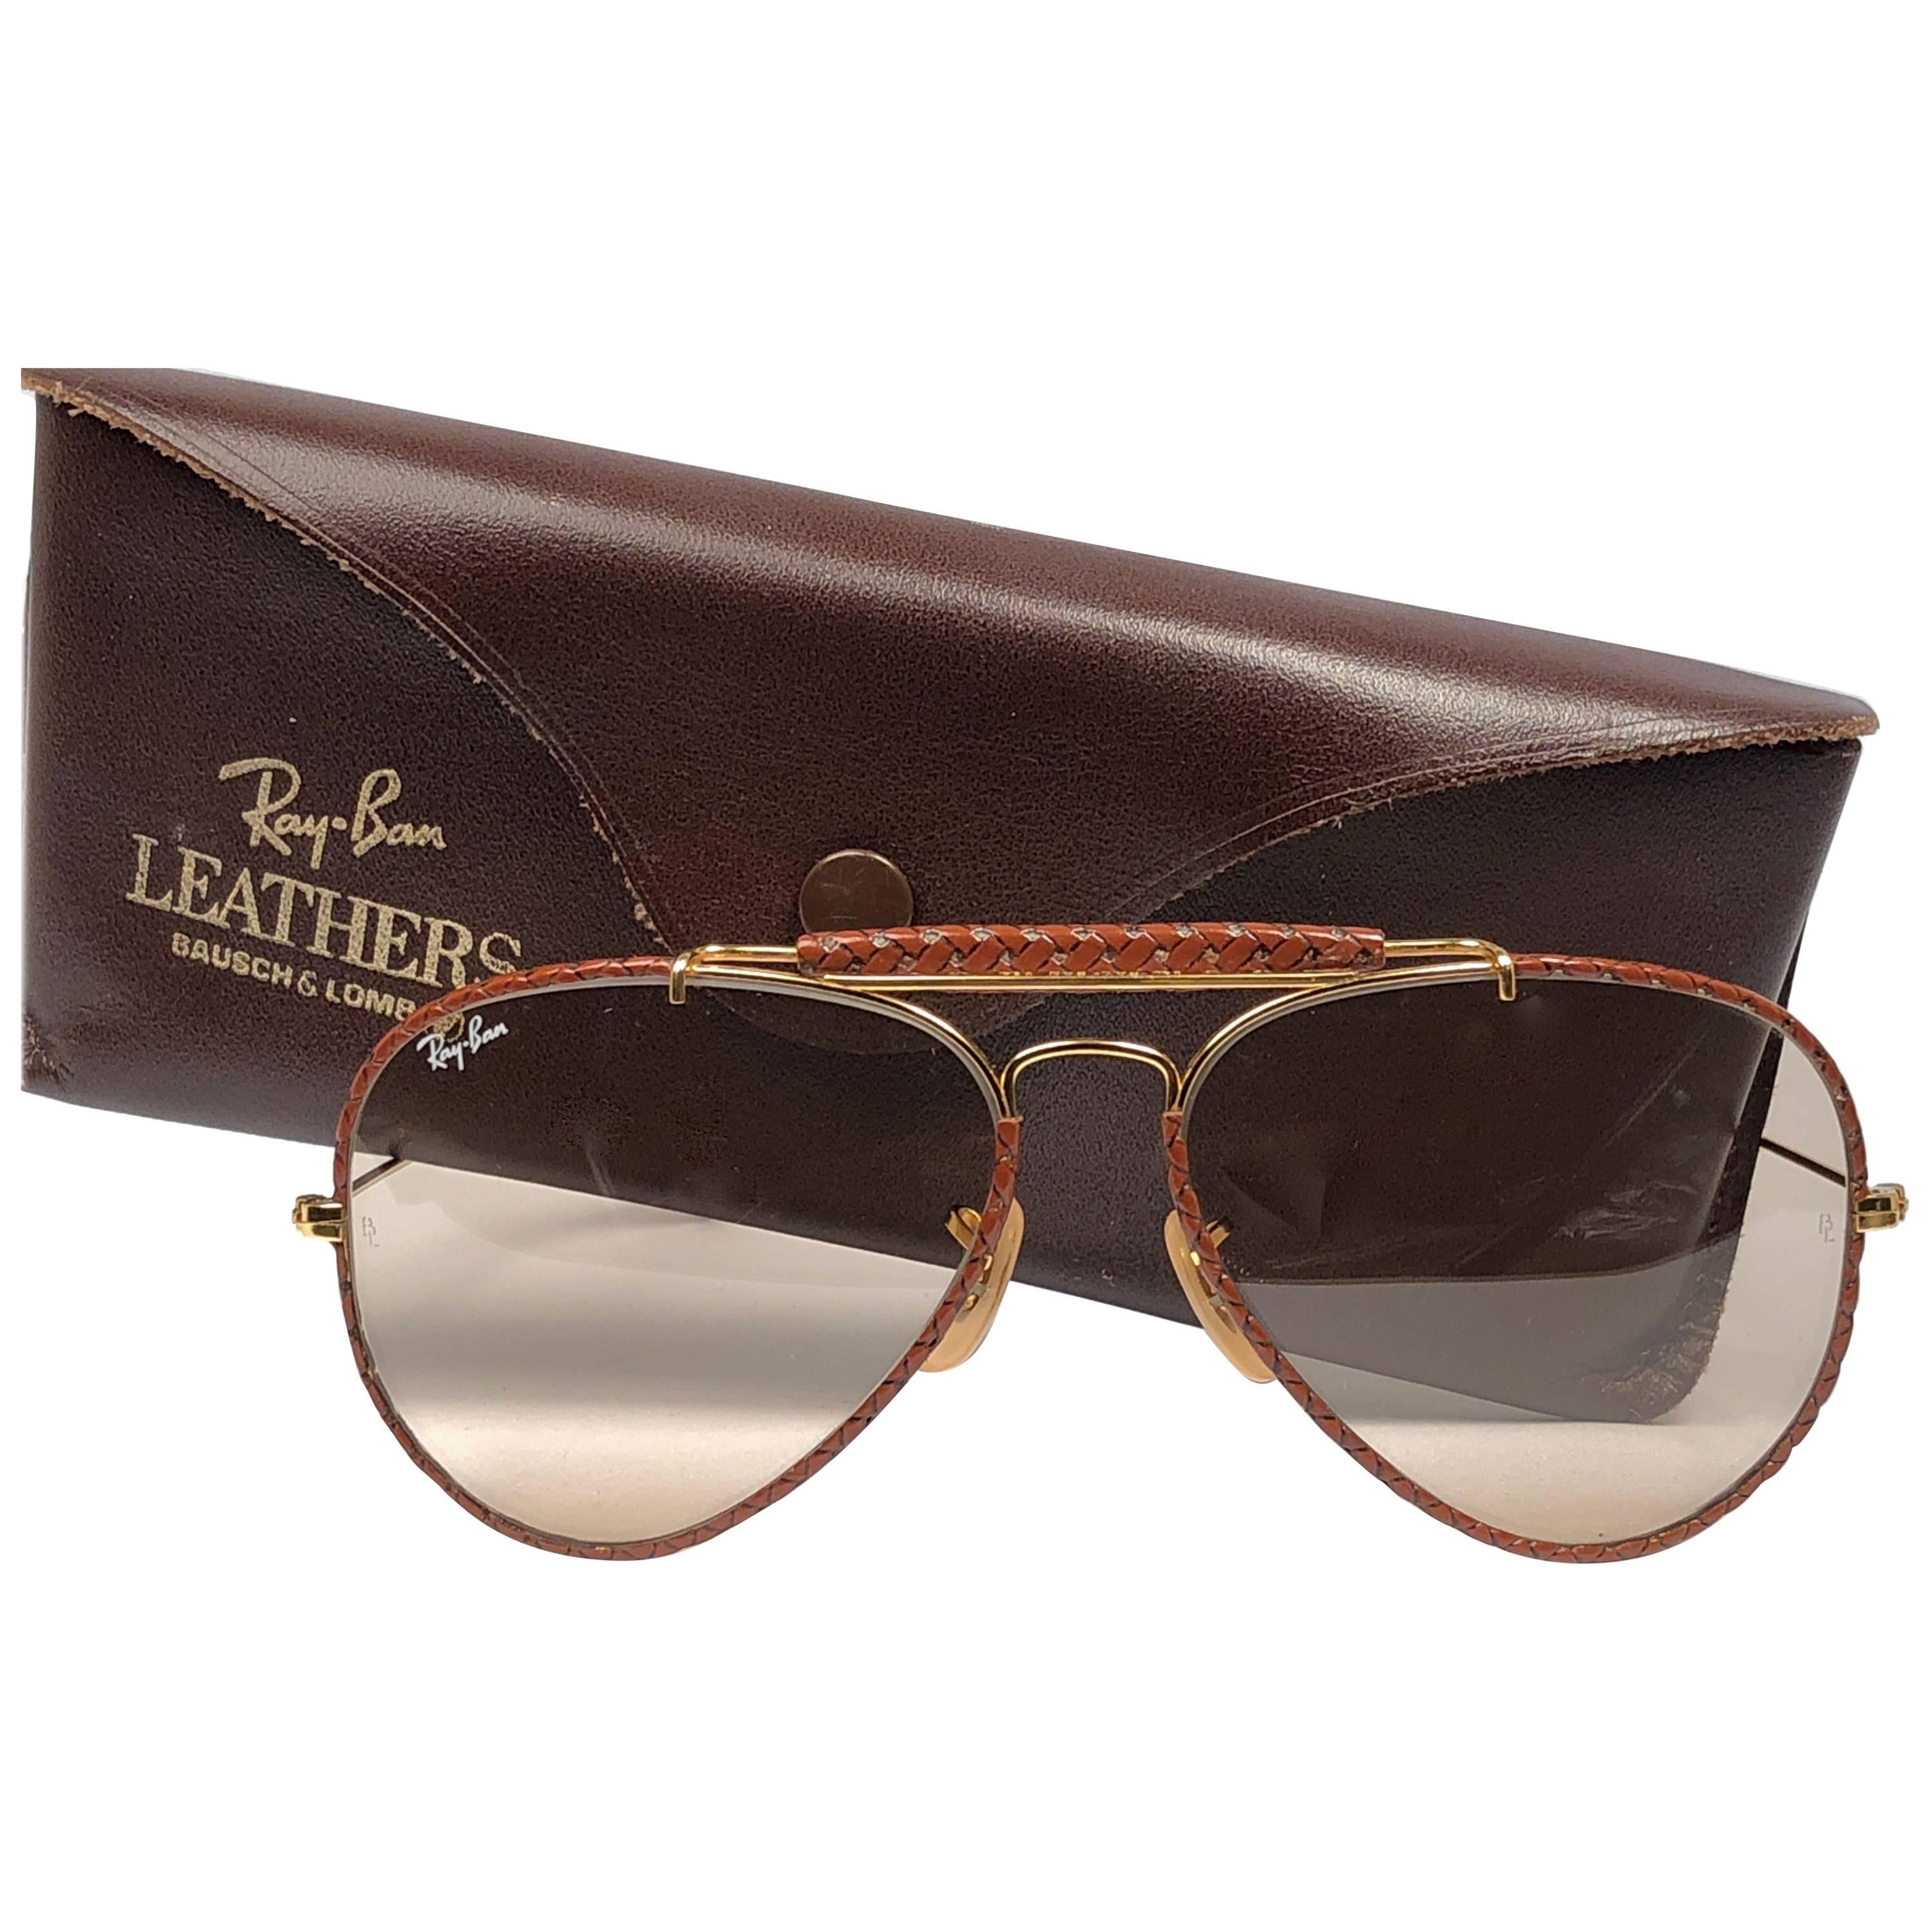 Ray Ban Vintage Leathers Outdoorsman Braid Leather B&L Sunglasses